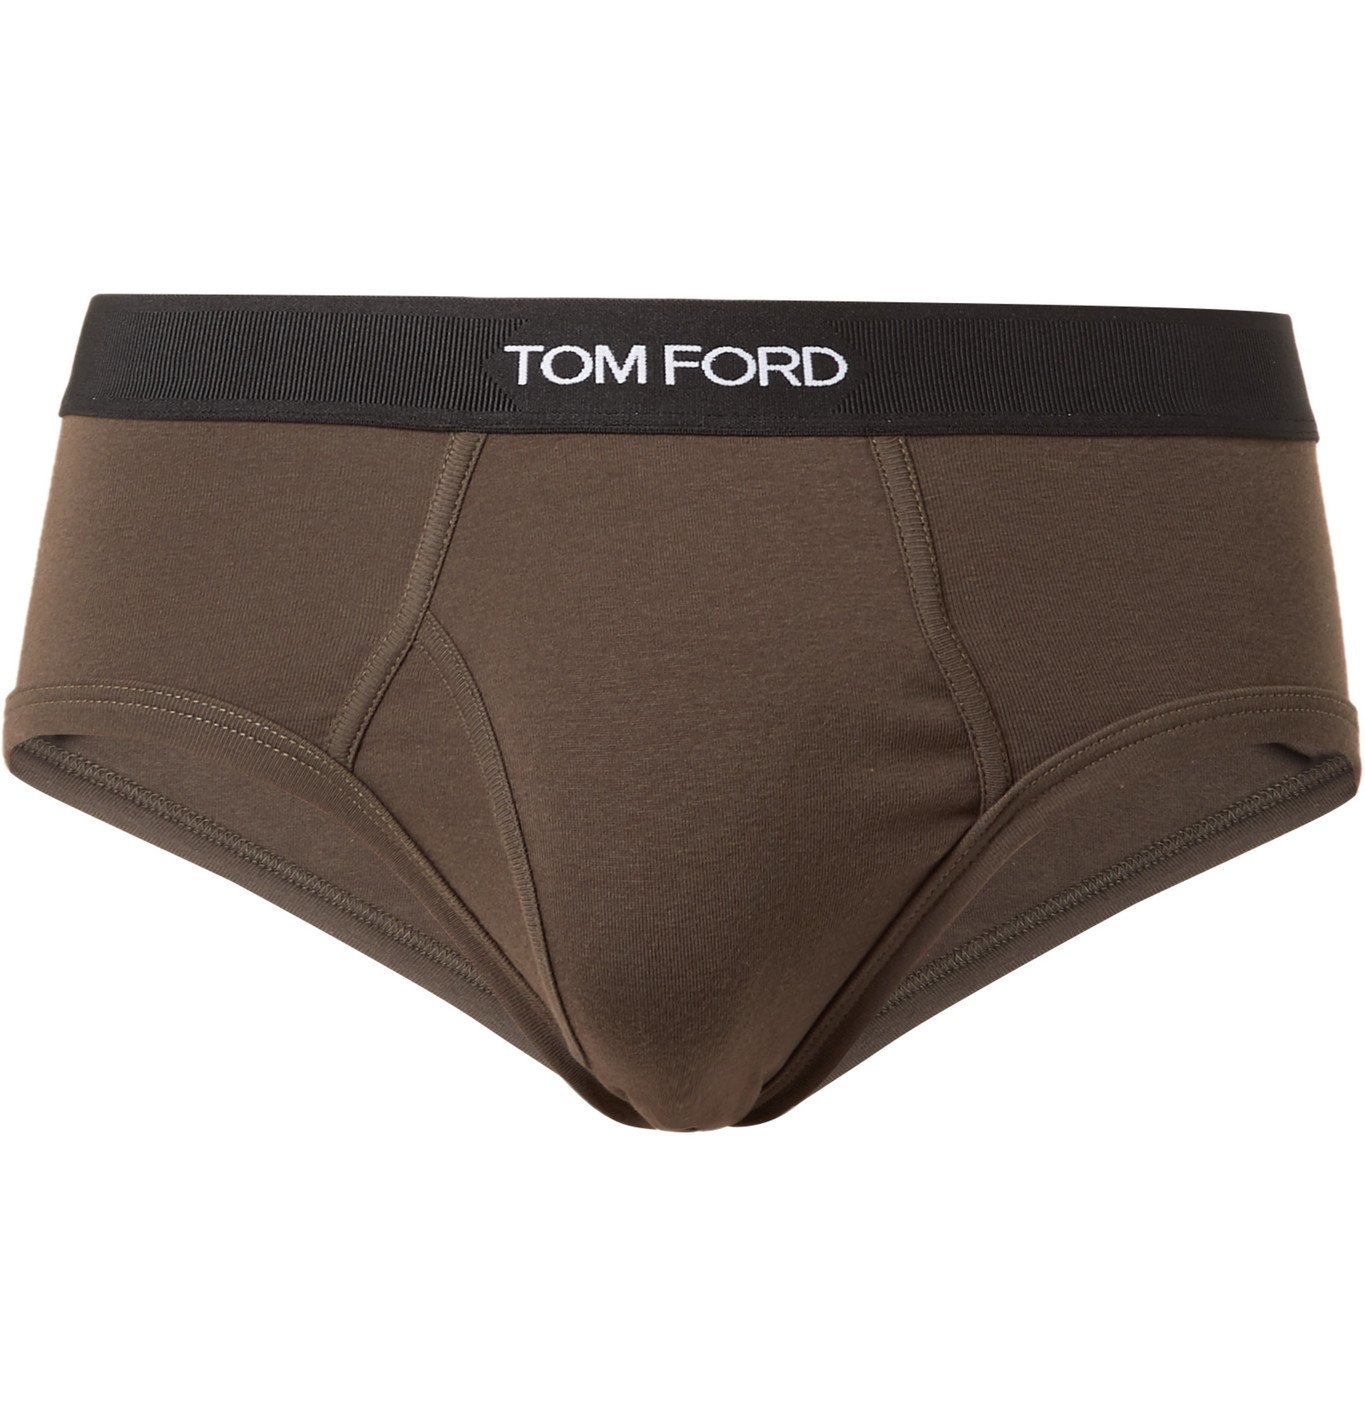 TOM FORD - Stretch-Cotton Briefs - Green TOM FORD